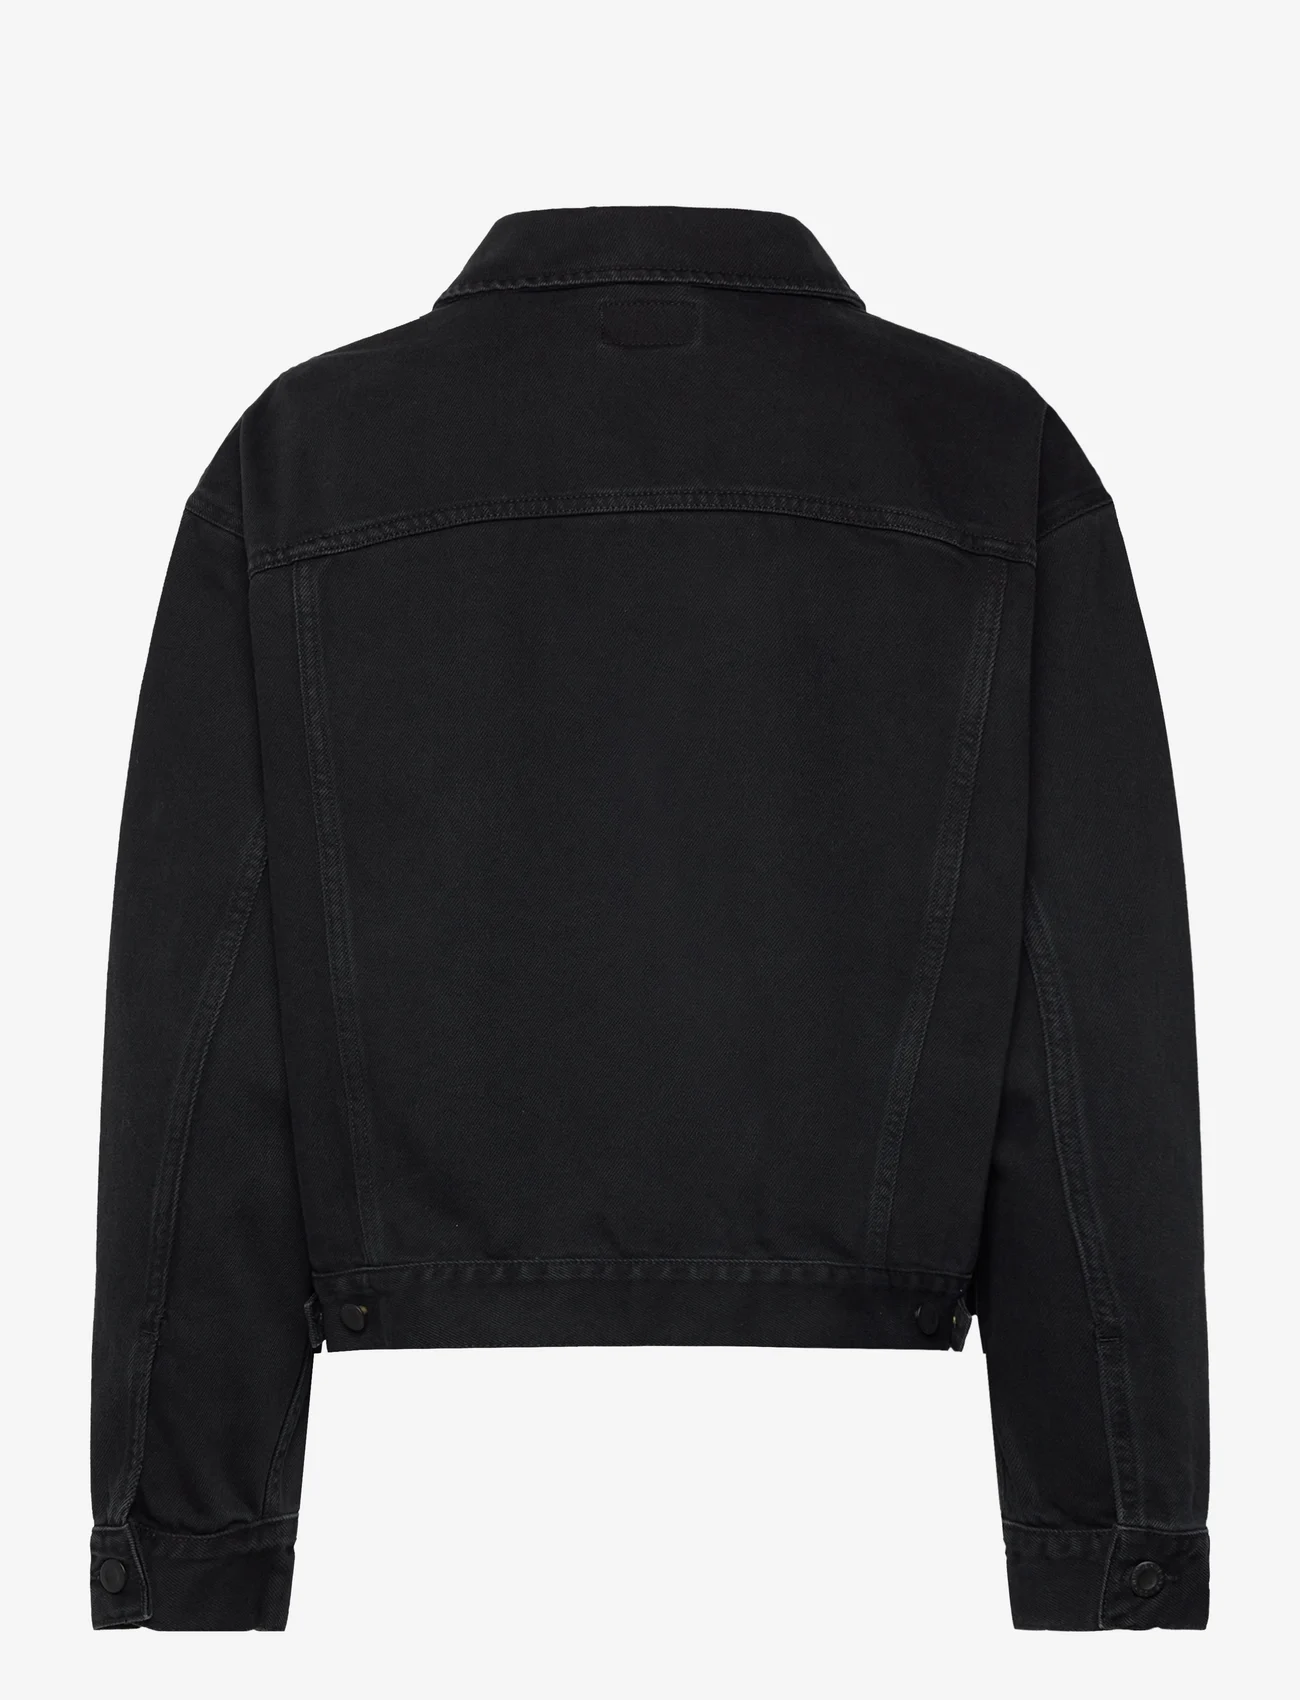 Nudie Jeans - Berit Denim Jacket Asphalt Black - farkkutakit - black - 1